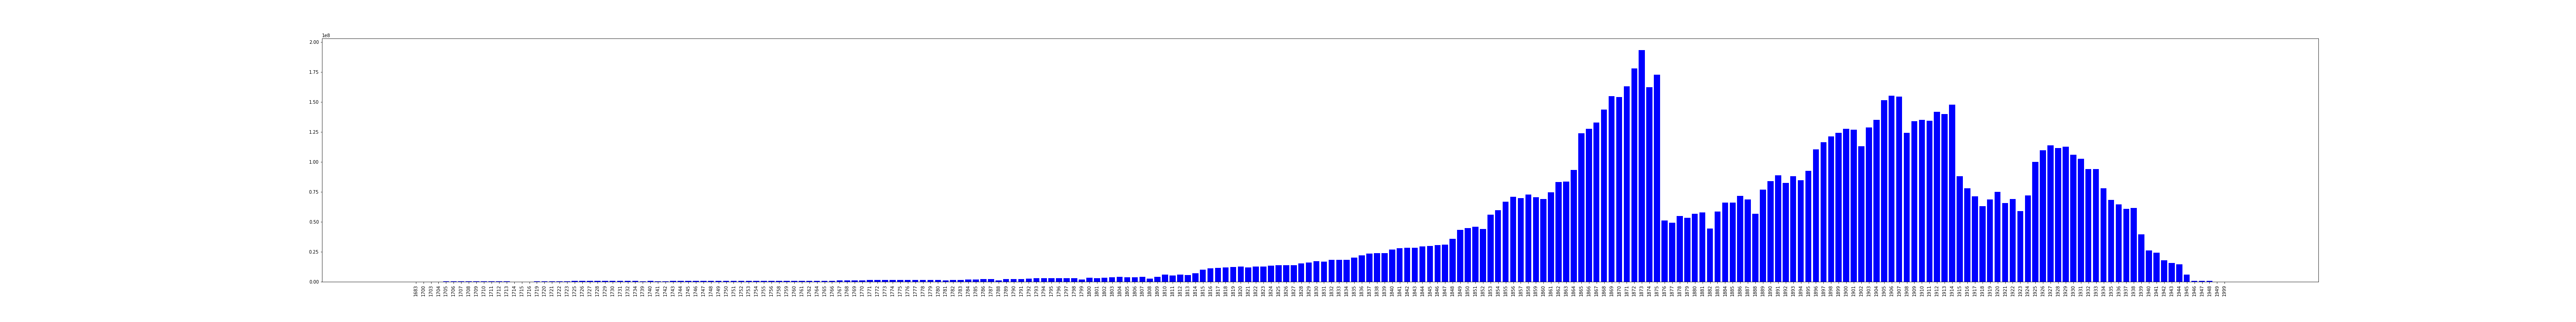 Tokens per year for German Europeana training corpus